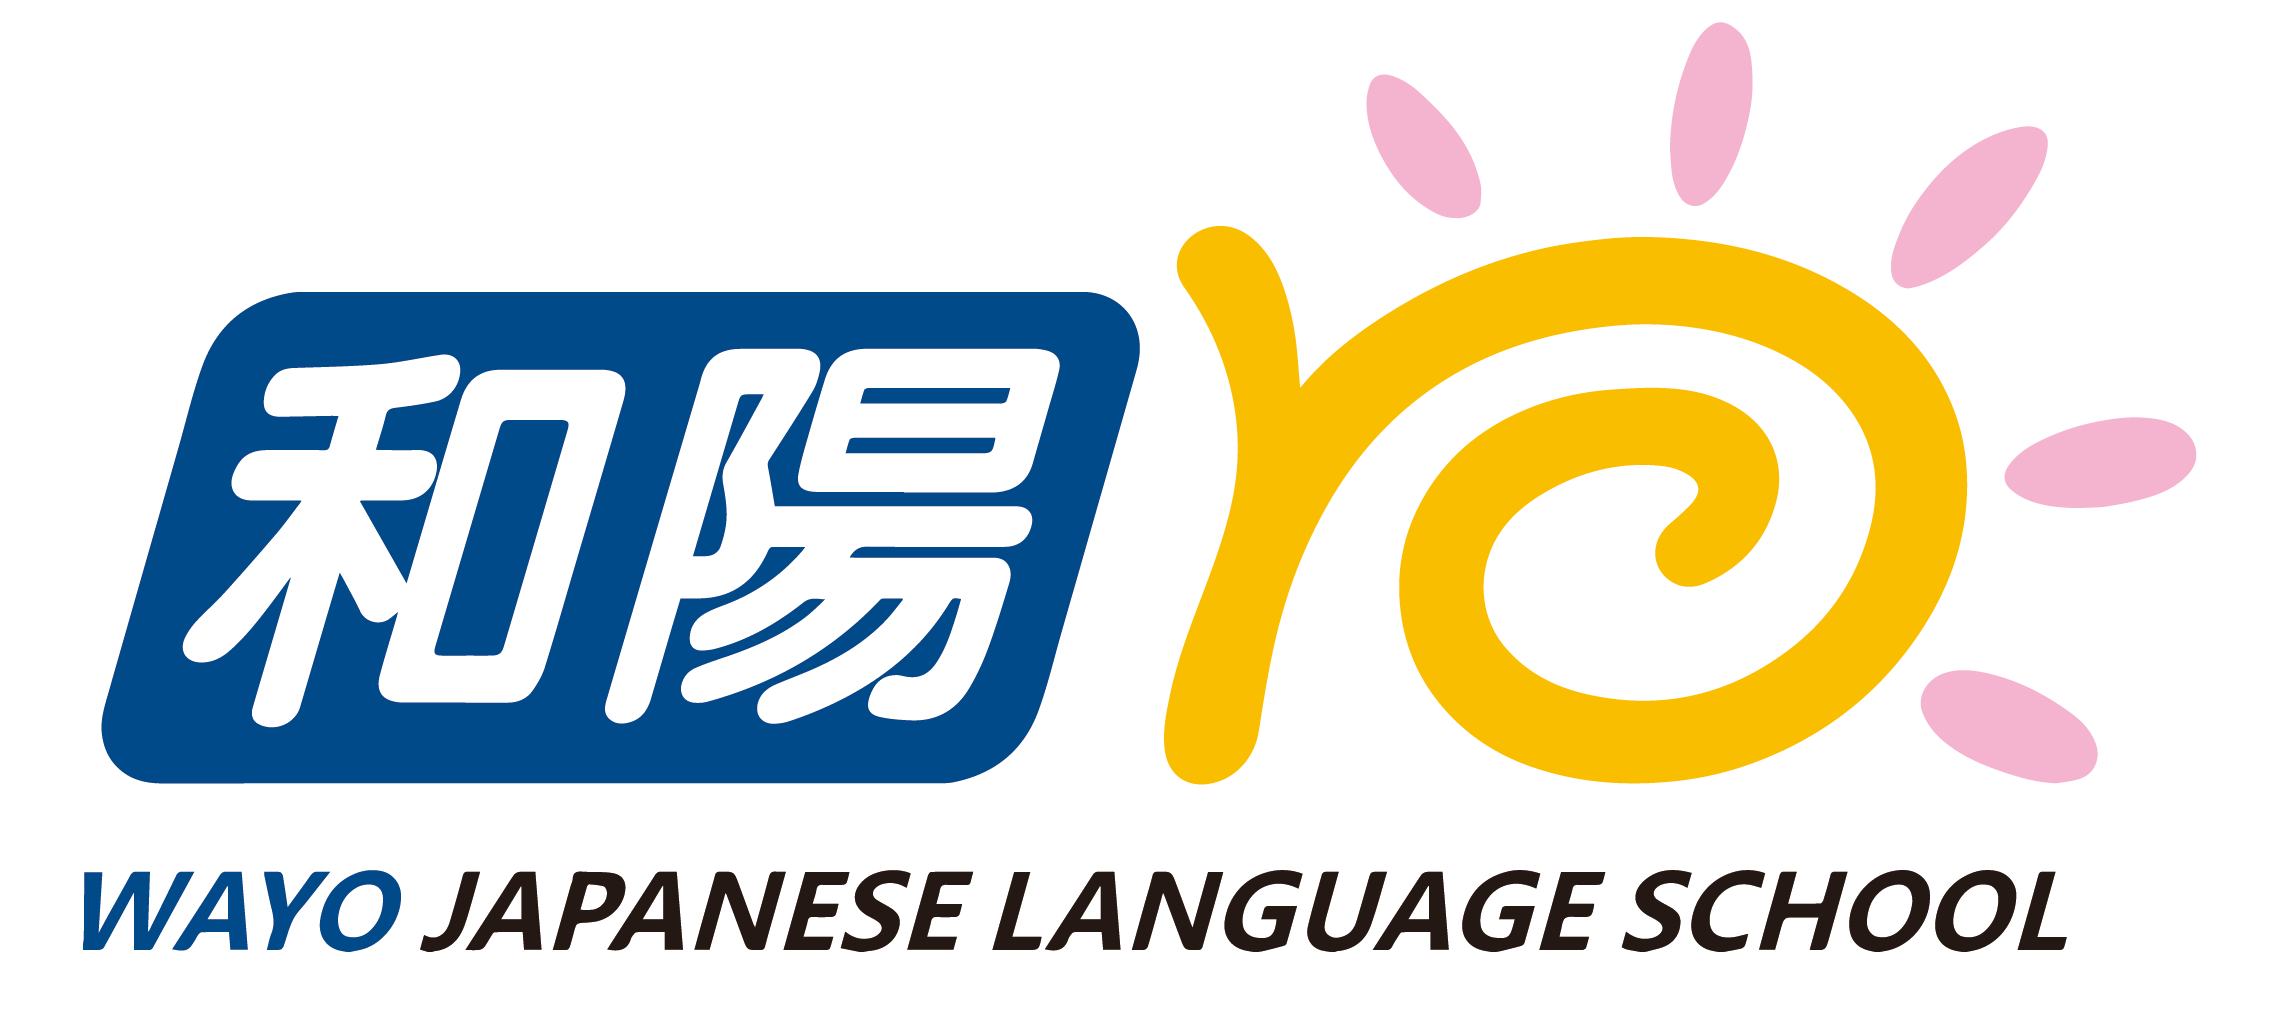 Wayo Japanese Language School Official Homepage